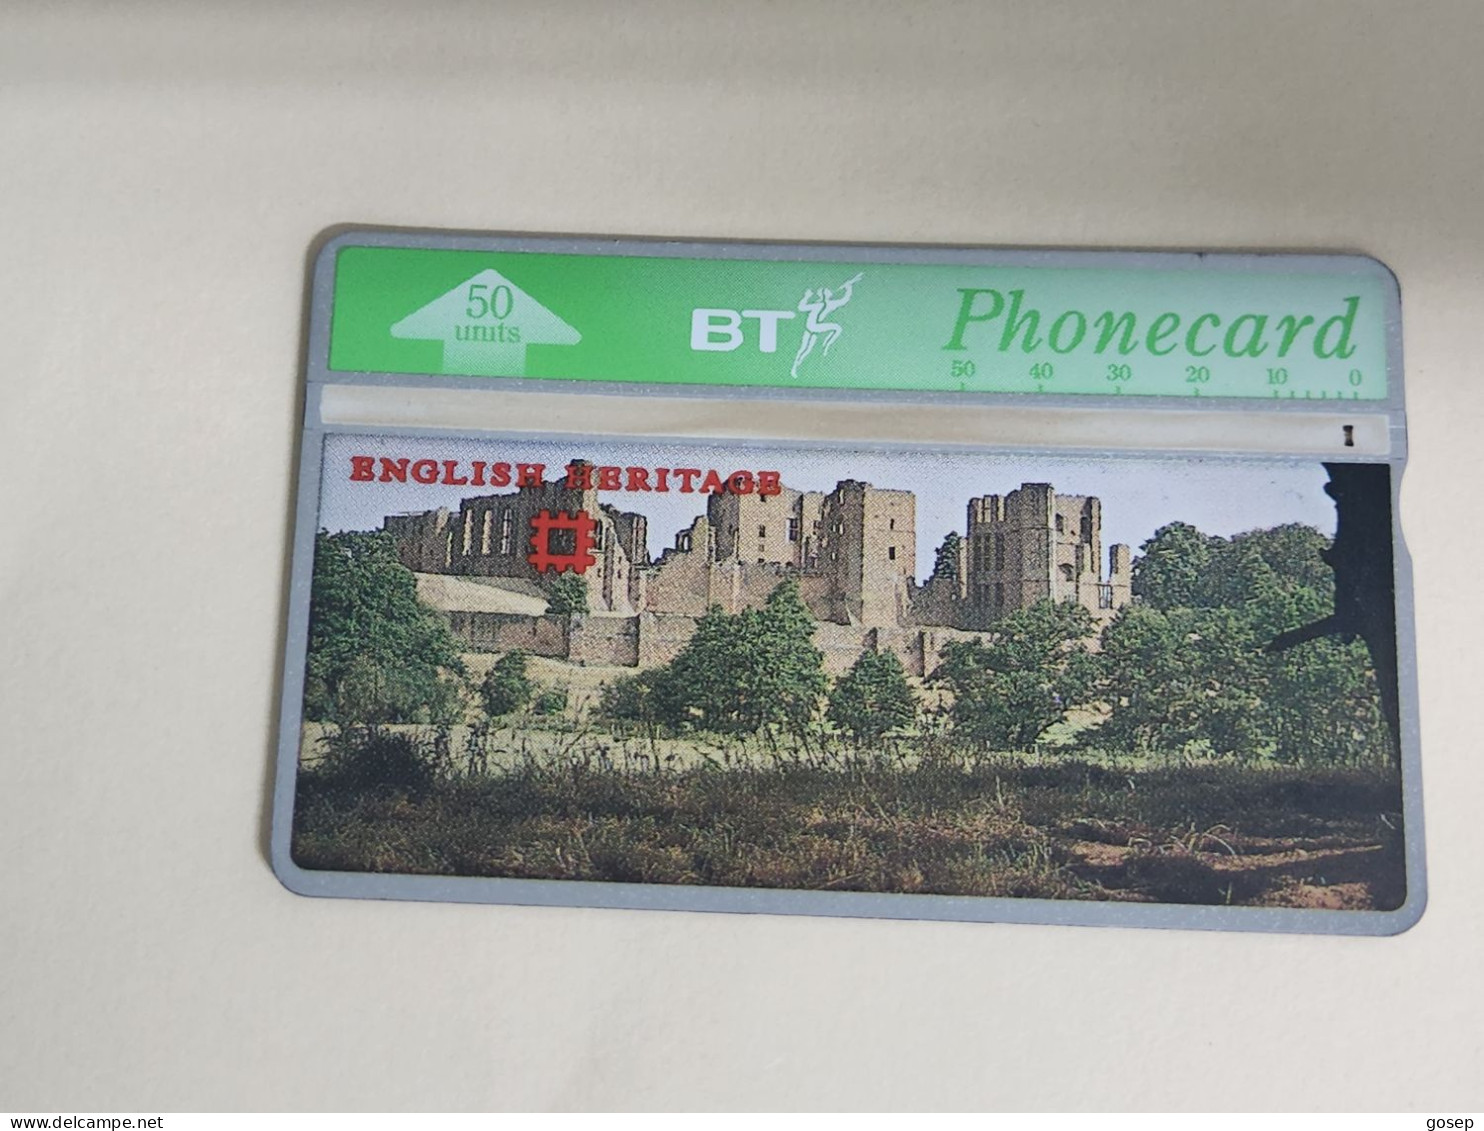 United Kingdom-(BTA108)-HERITAGE-Kenilworth Castle-(182)(50units)(528D70525)price Cataloge3.00£-used+1card Prepiad Free - BT Emissioni Pubblicitarie